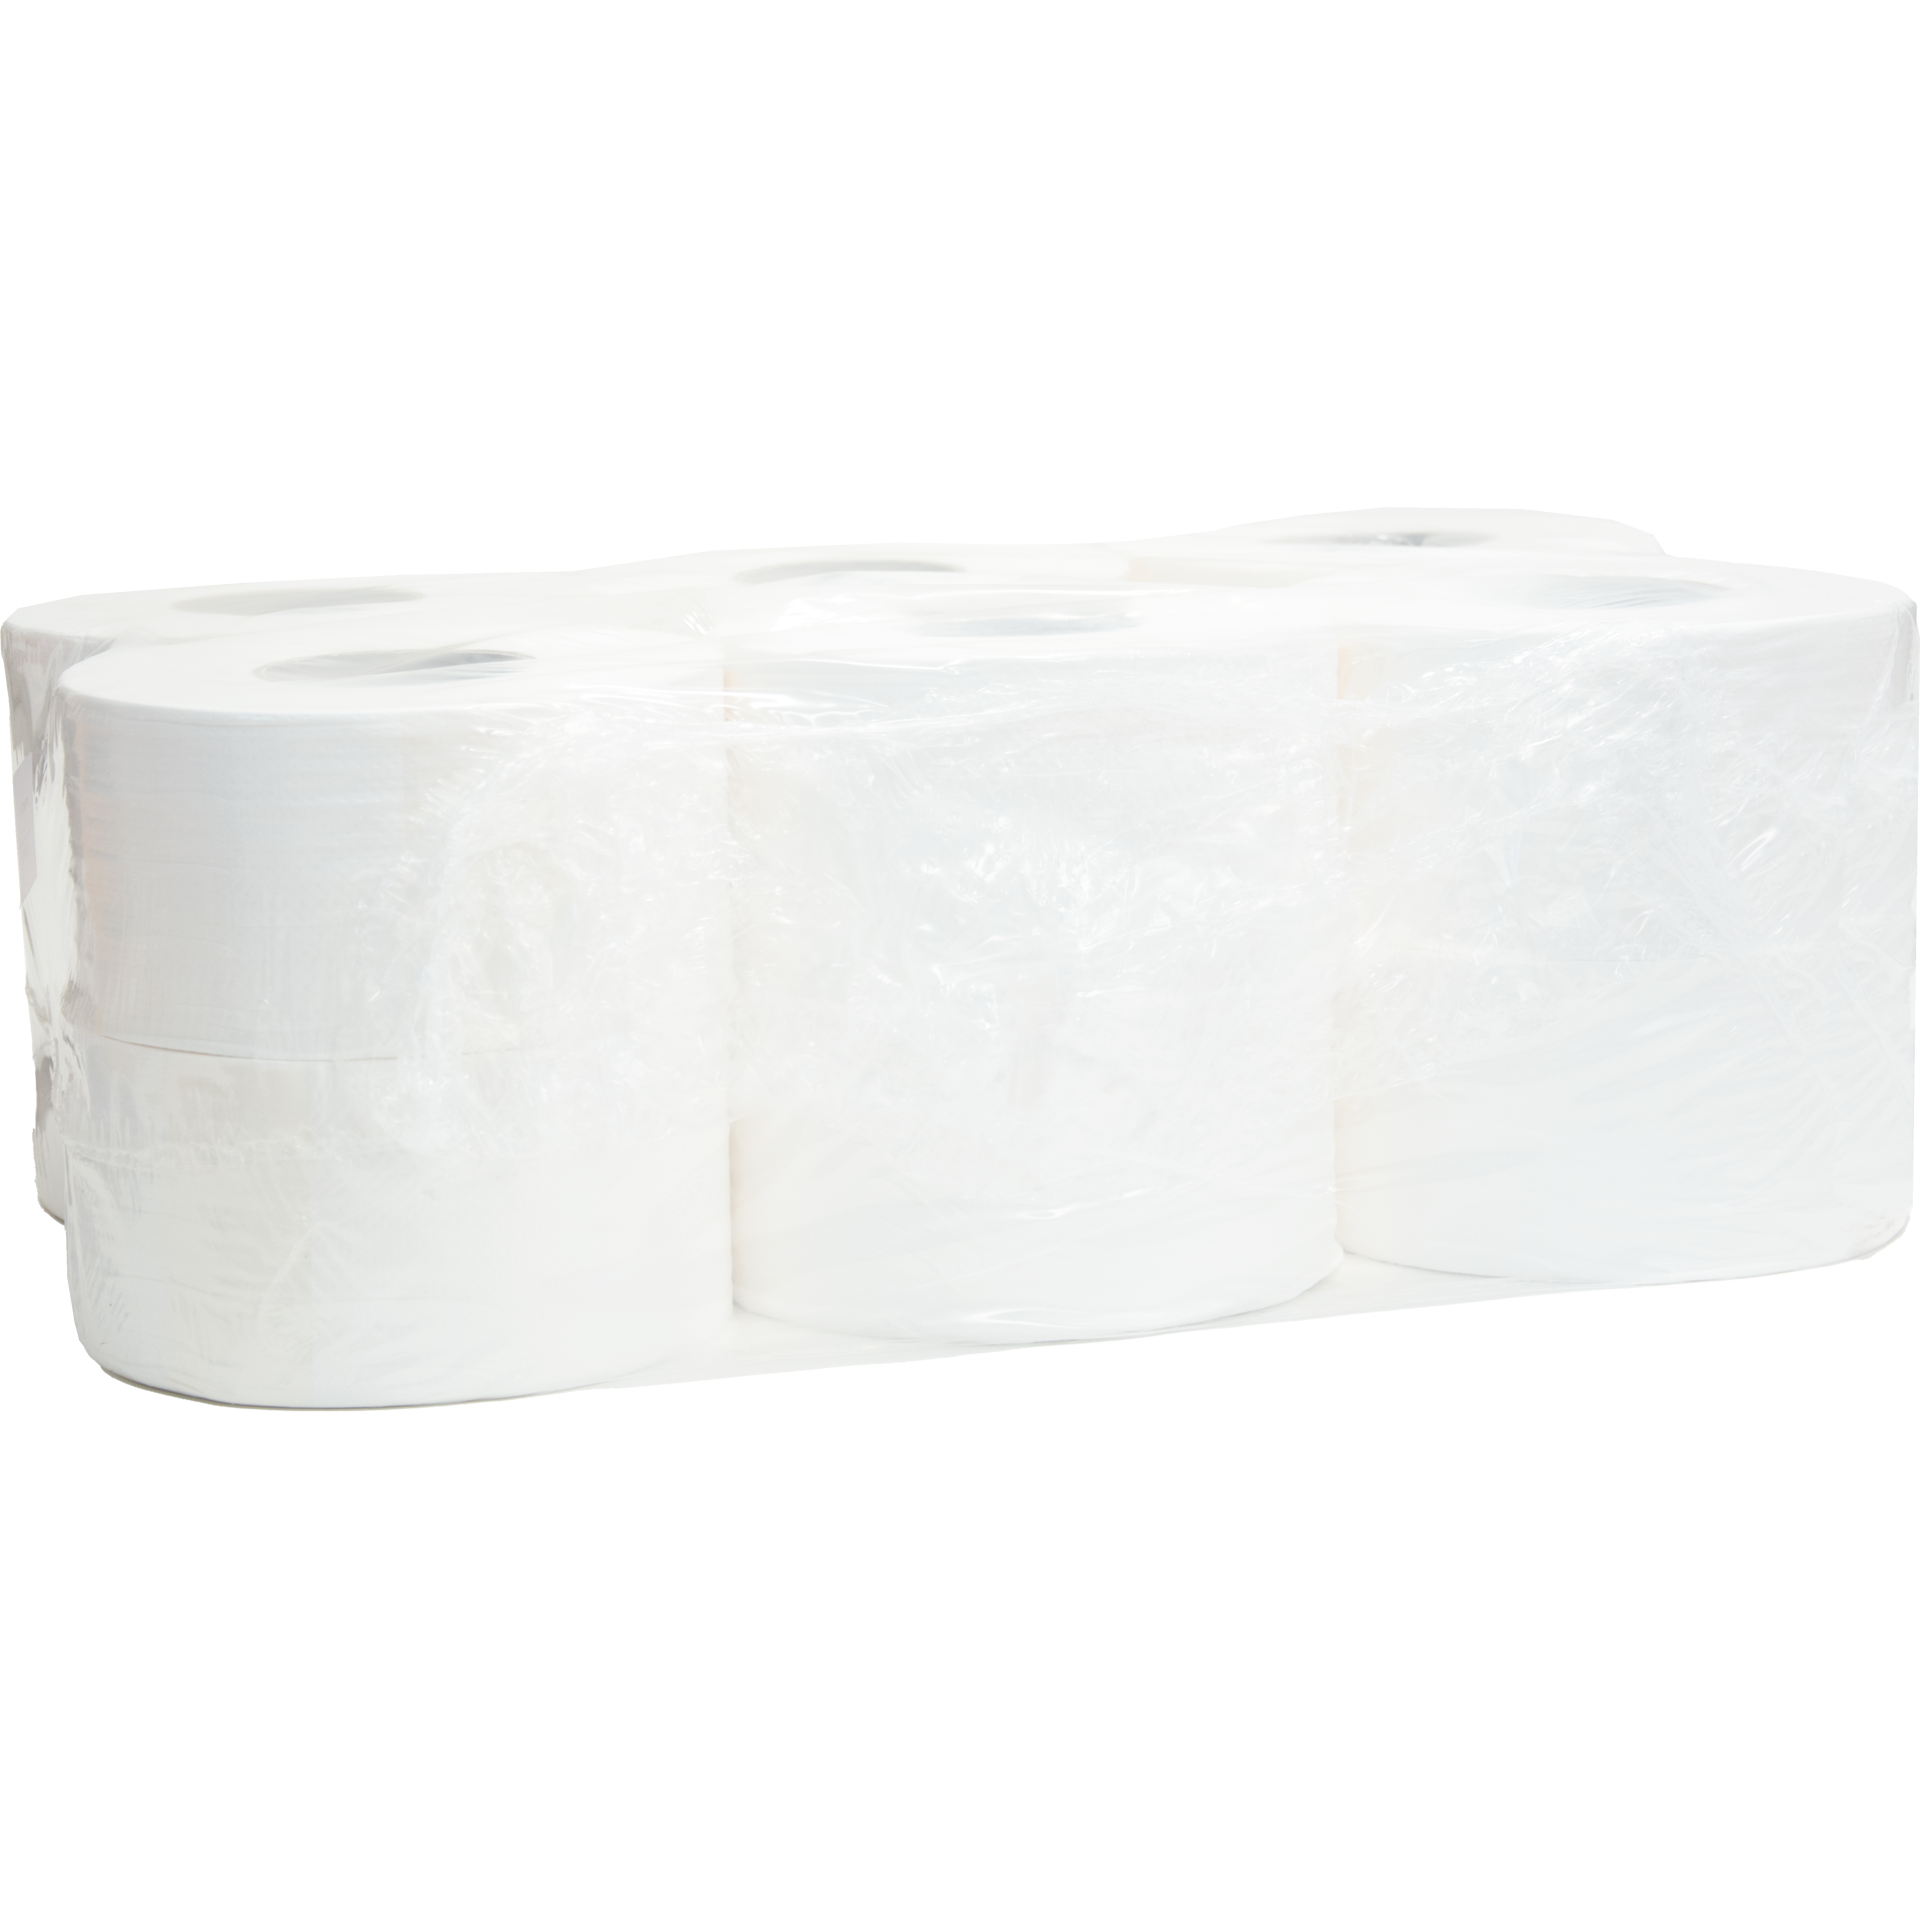 Toilettenpapier | Jumbo Solution Paper | weiß 2lg. 1.120 Abrisse/25 cm